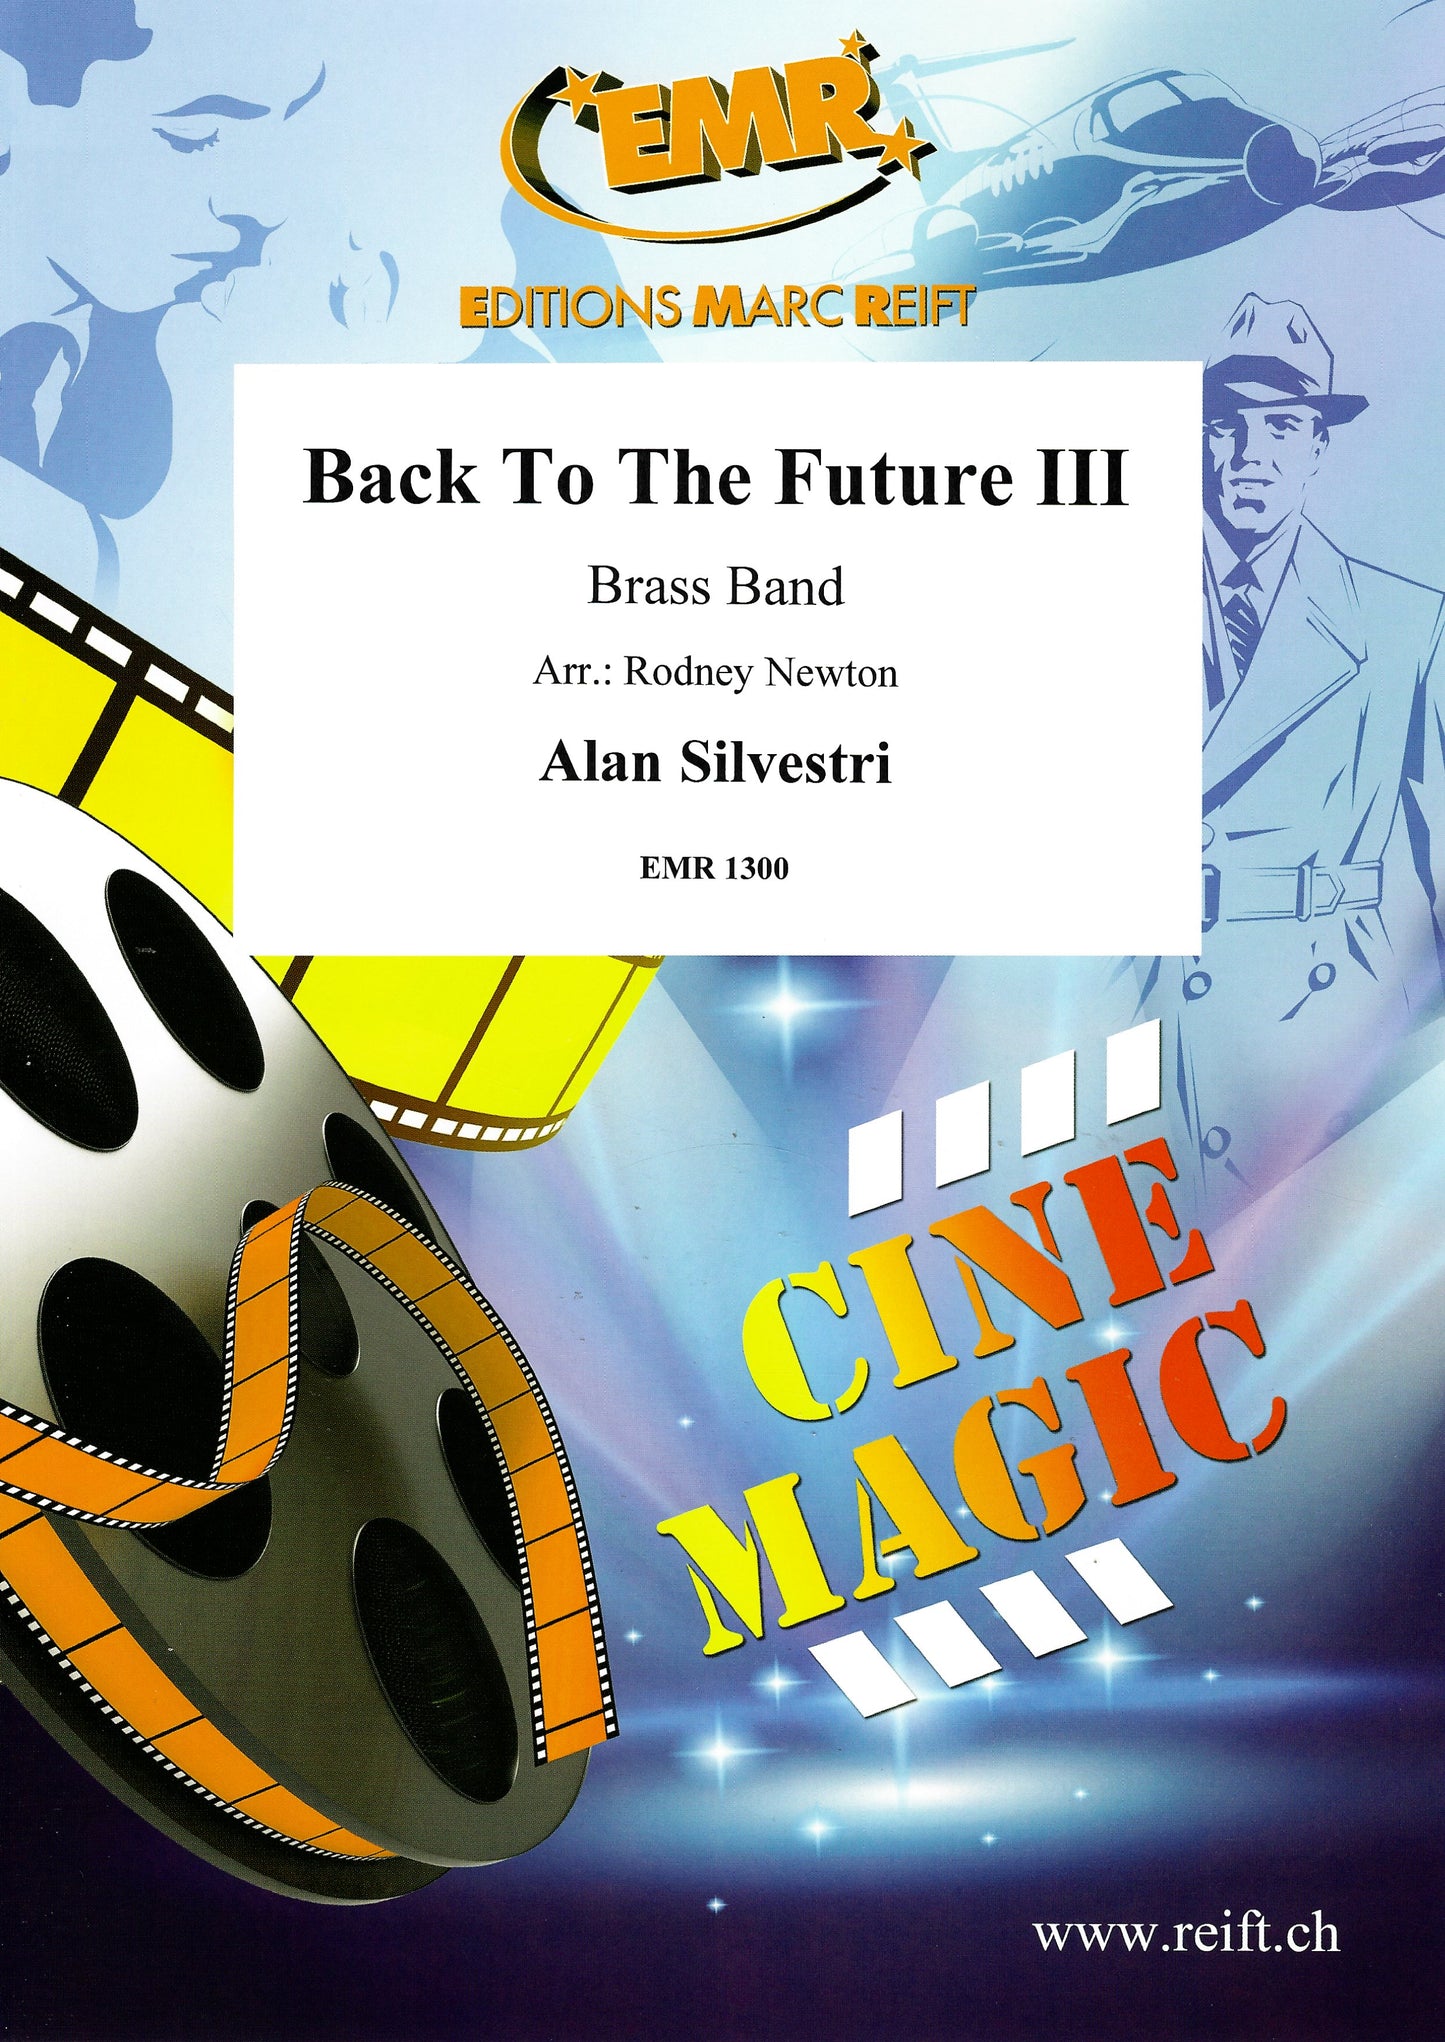 Back To The Future III